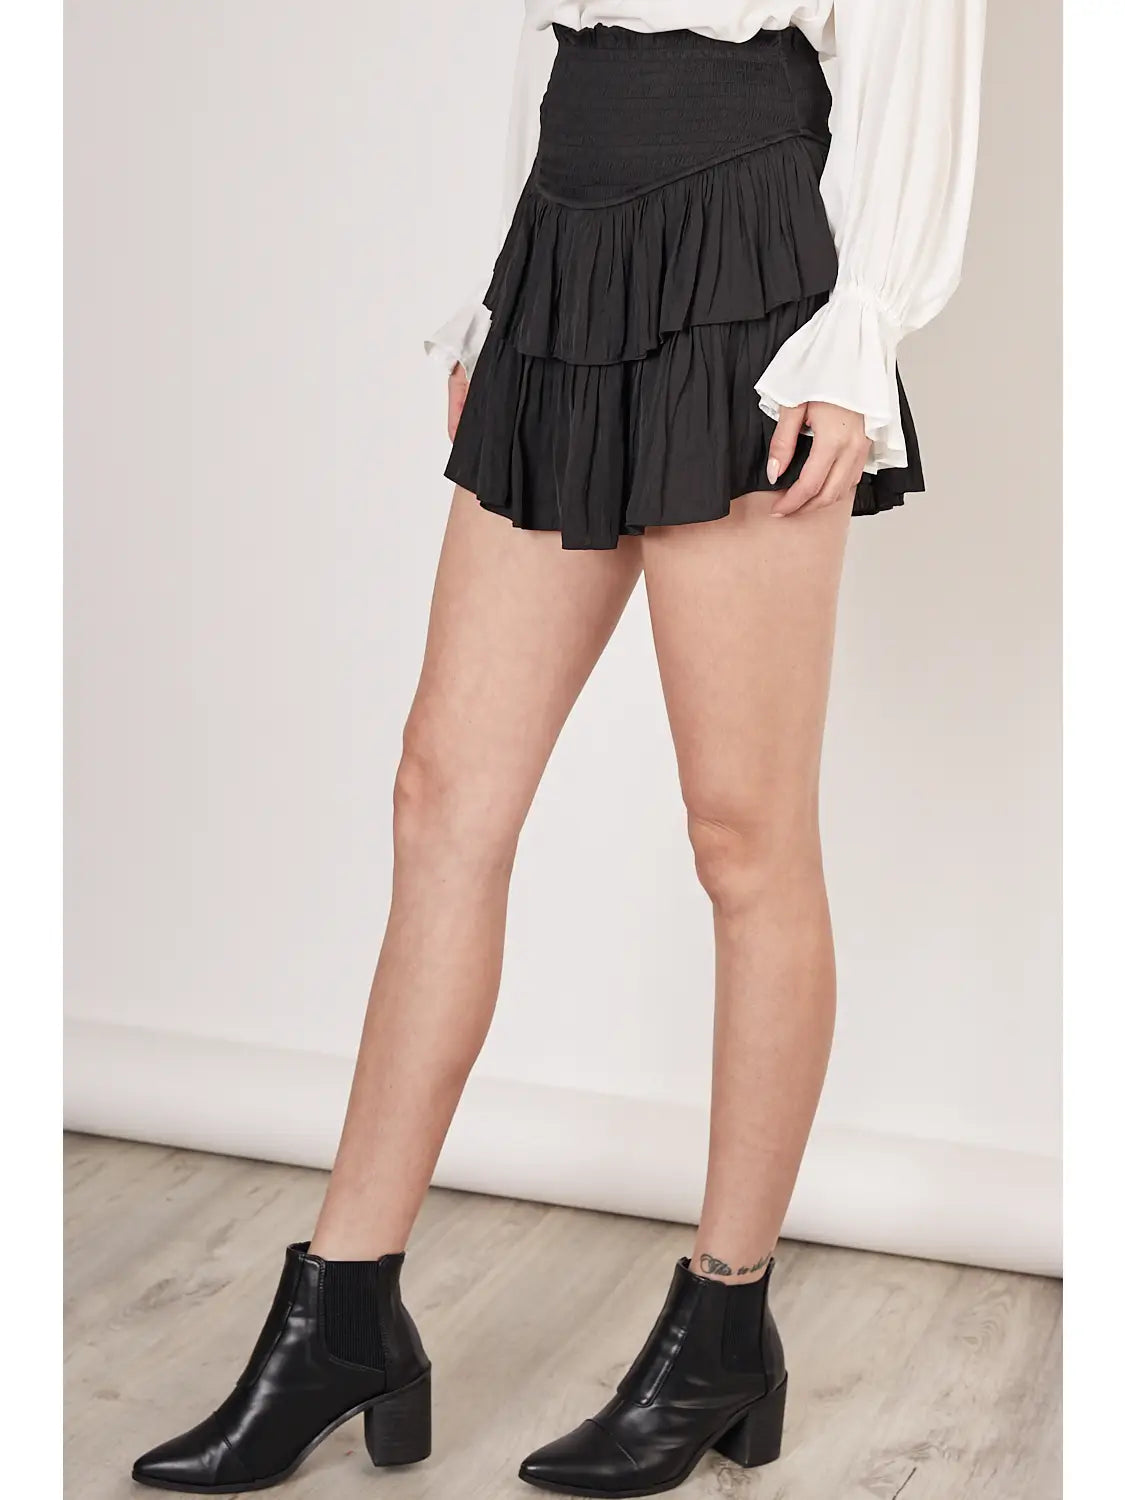 Black Smocked Ruffle Skirt With Shorts - MS